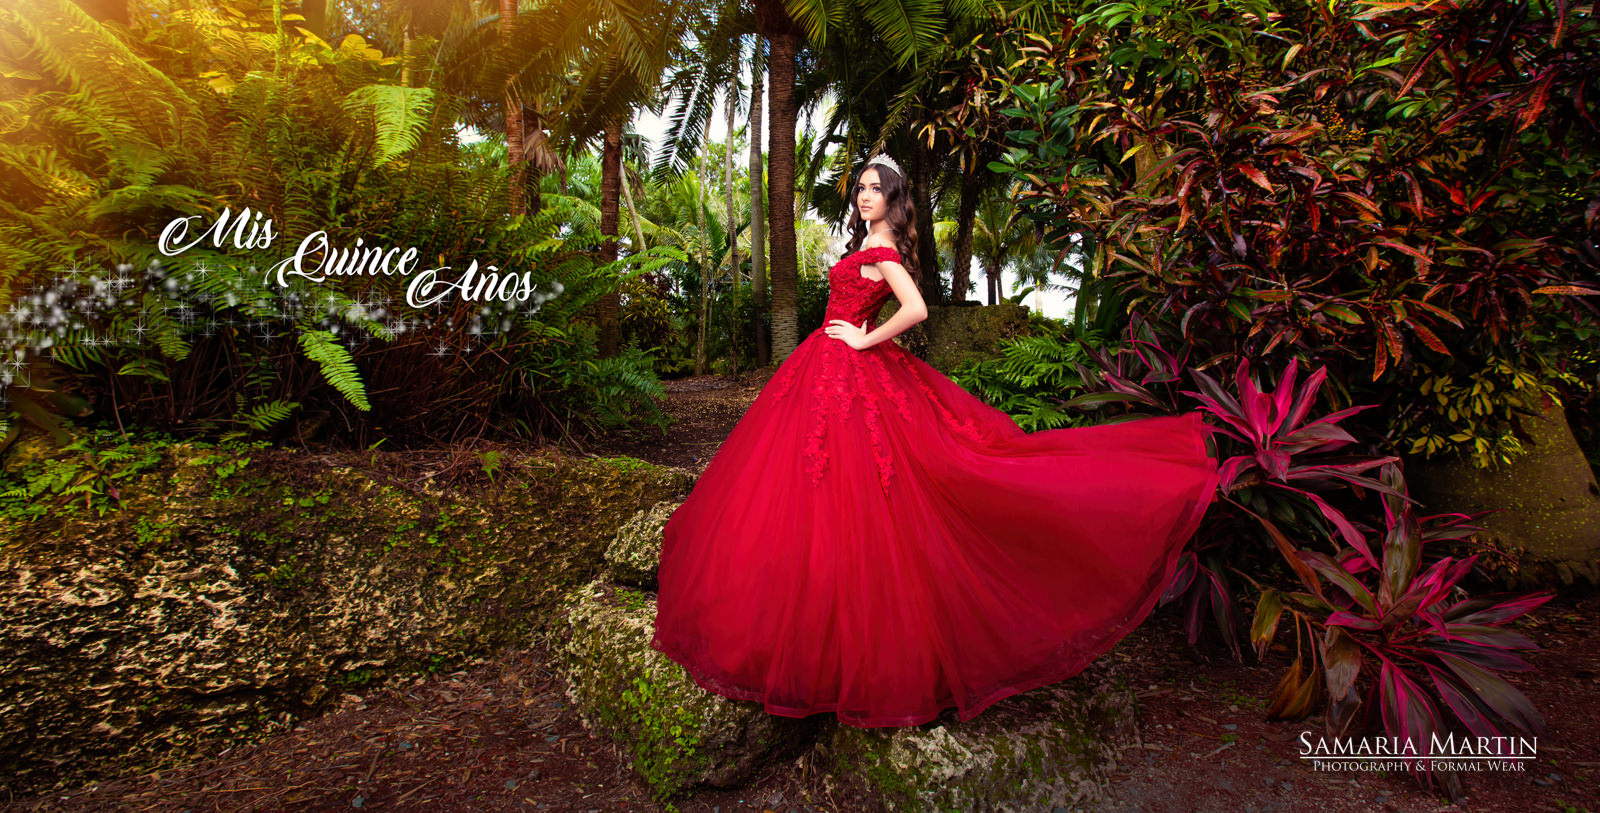 Fashion photoshoot, rent of quinceañeras dresses, quince photoshoot, Miami dress rental, Samaria Martin photography in Miami